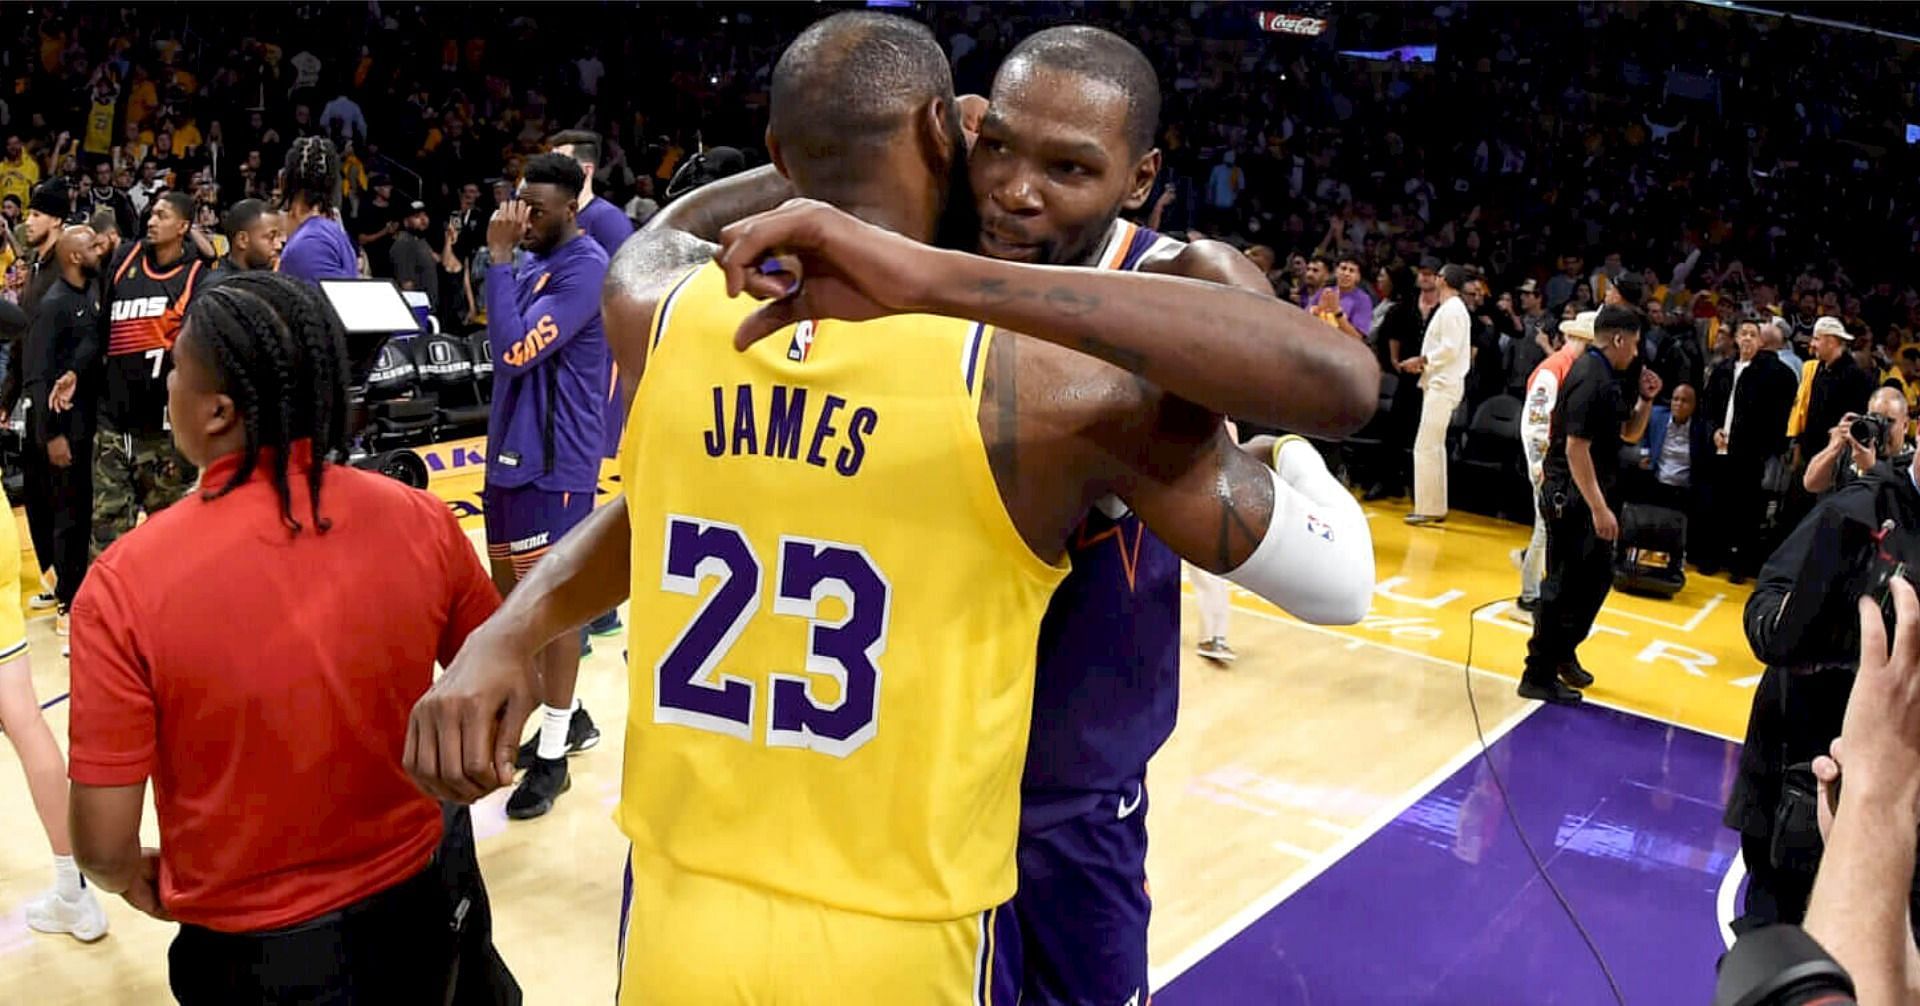 NBA superstar forwards LeBron James and Kevin Durant